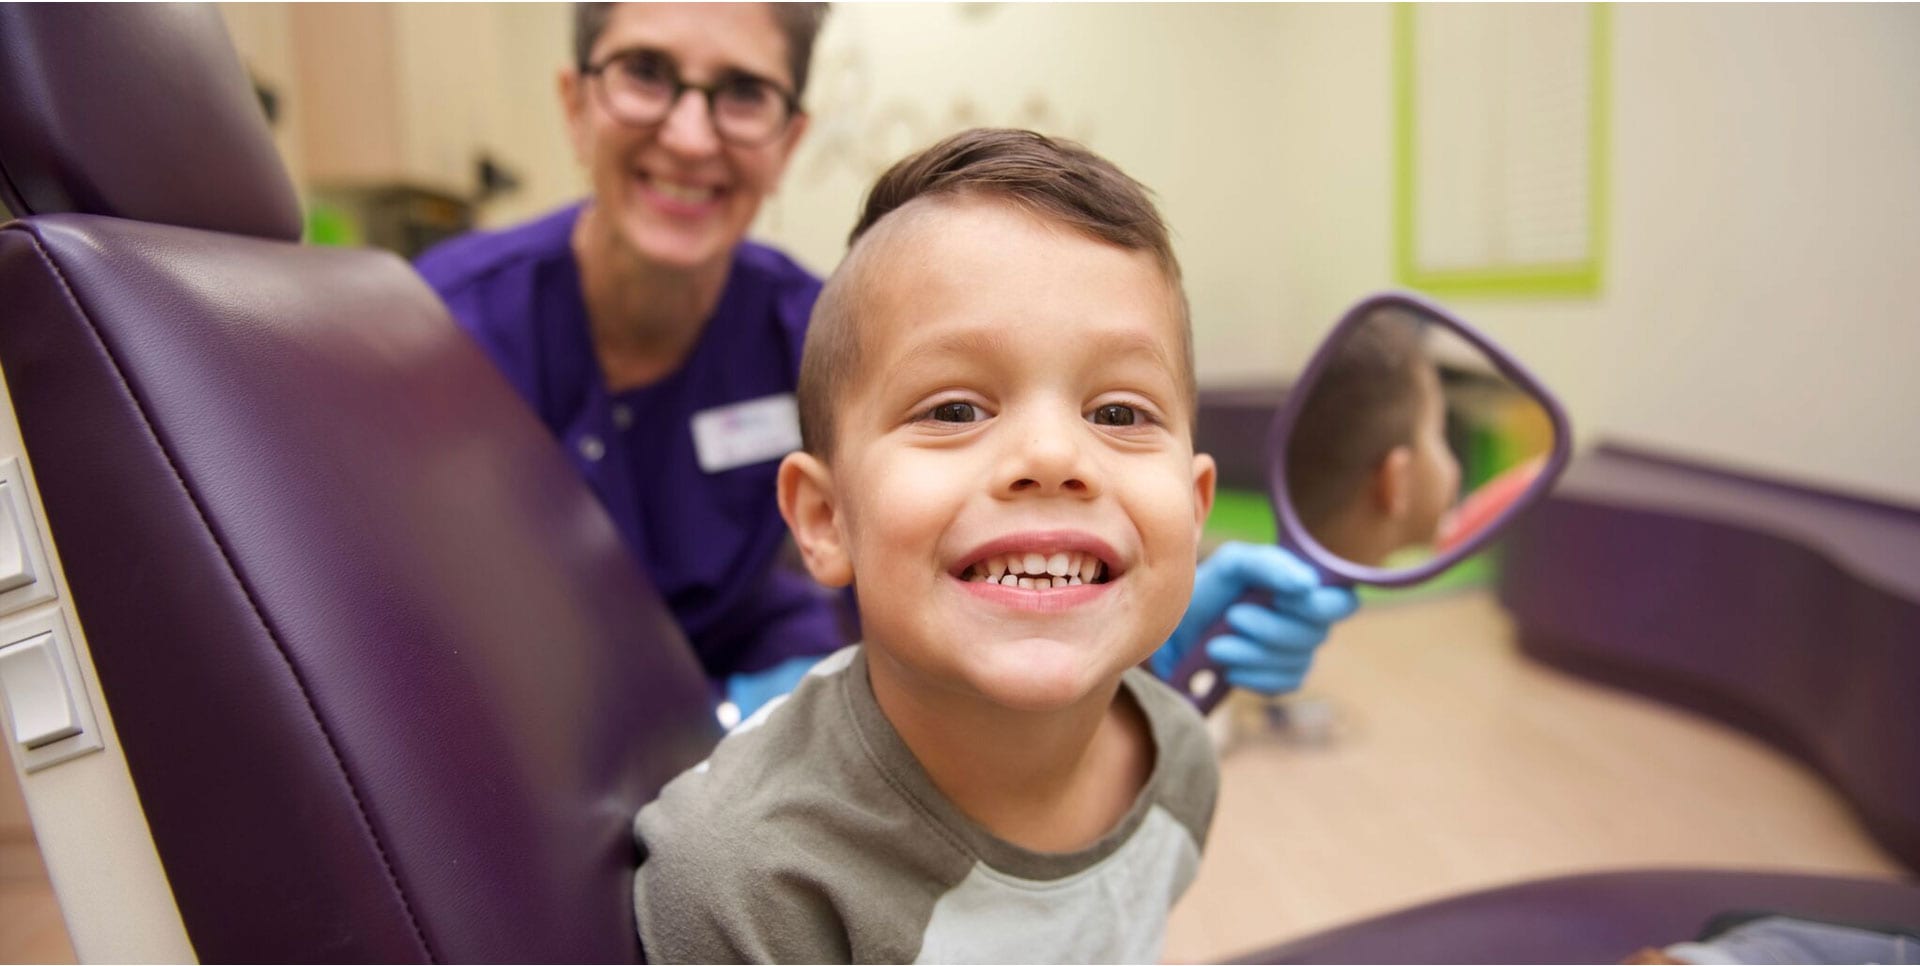 Children's Dentist Near Me | Great Beginnings Pediatric ...